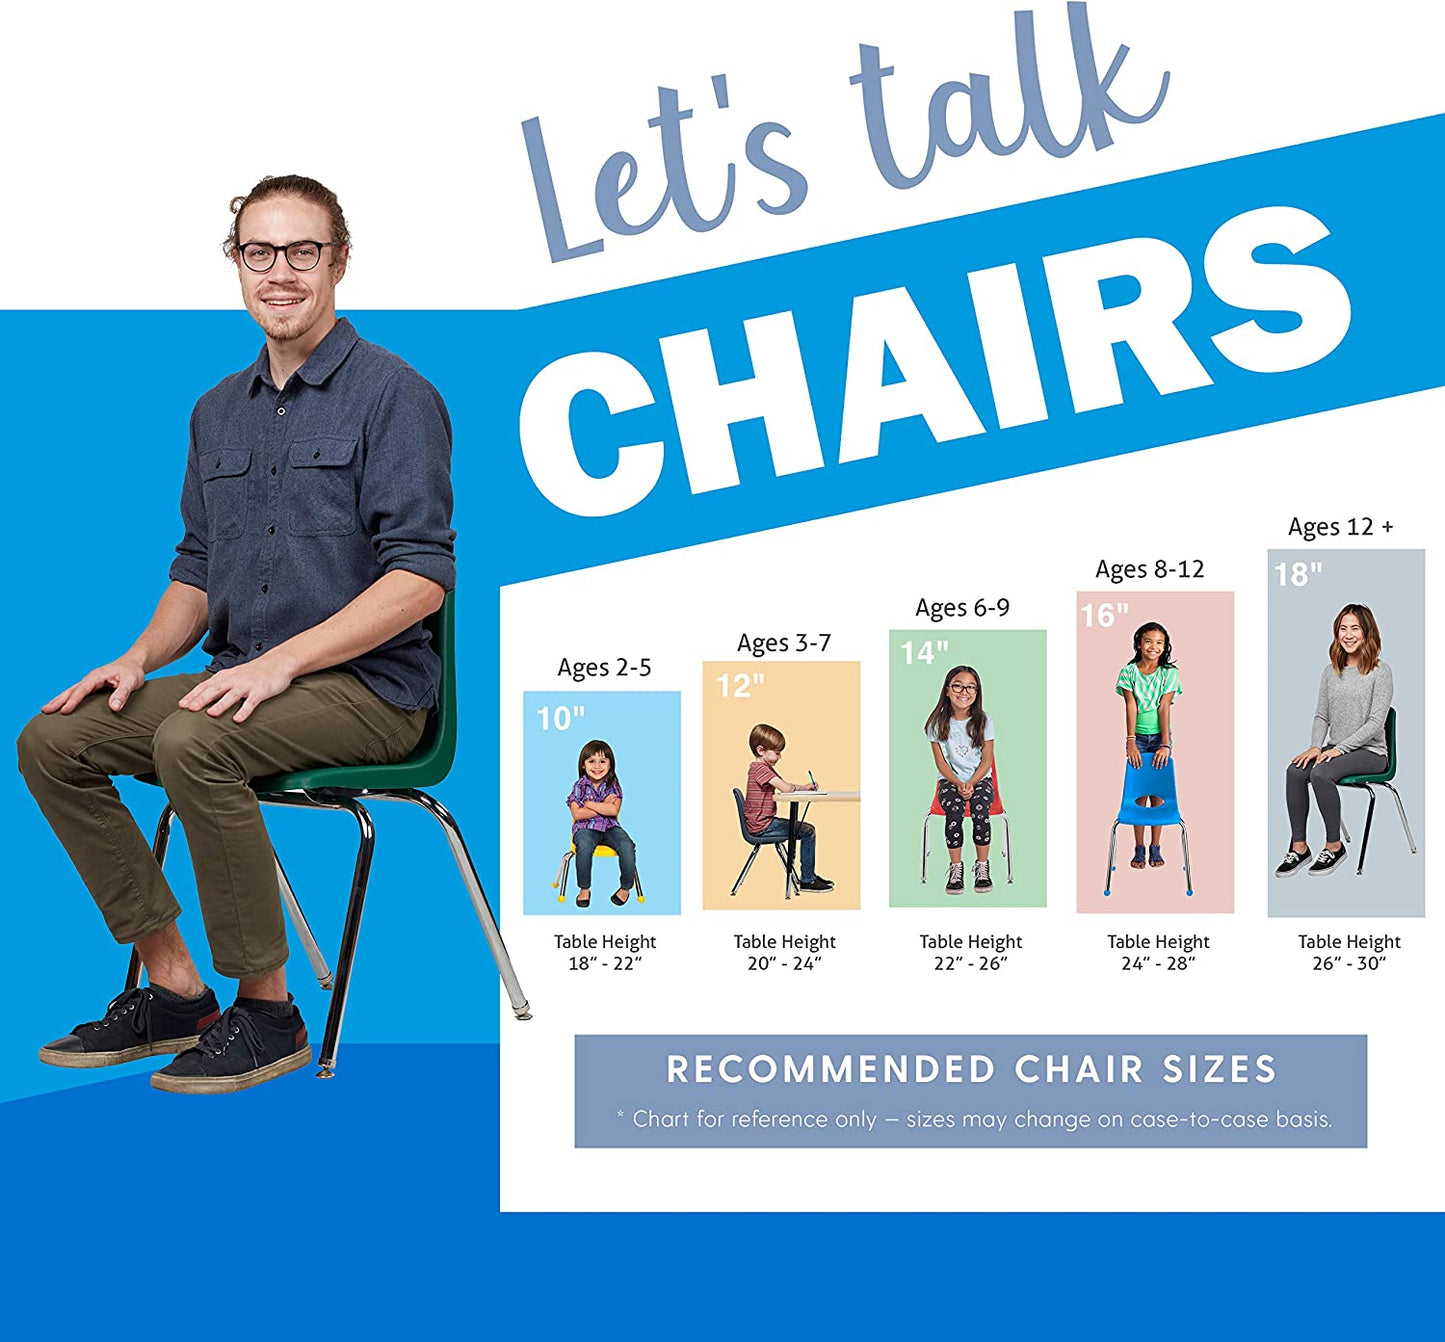 FDP Stackable School Chair, Chrome Legs, Swivel Glide - 14" Seat Height (FDP-10364) - SchoolOutlet